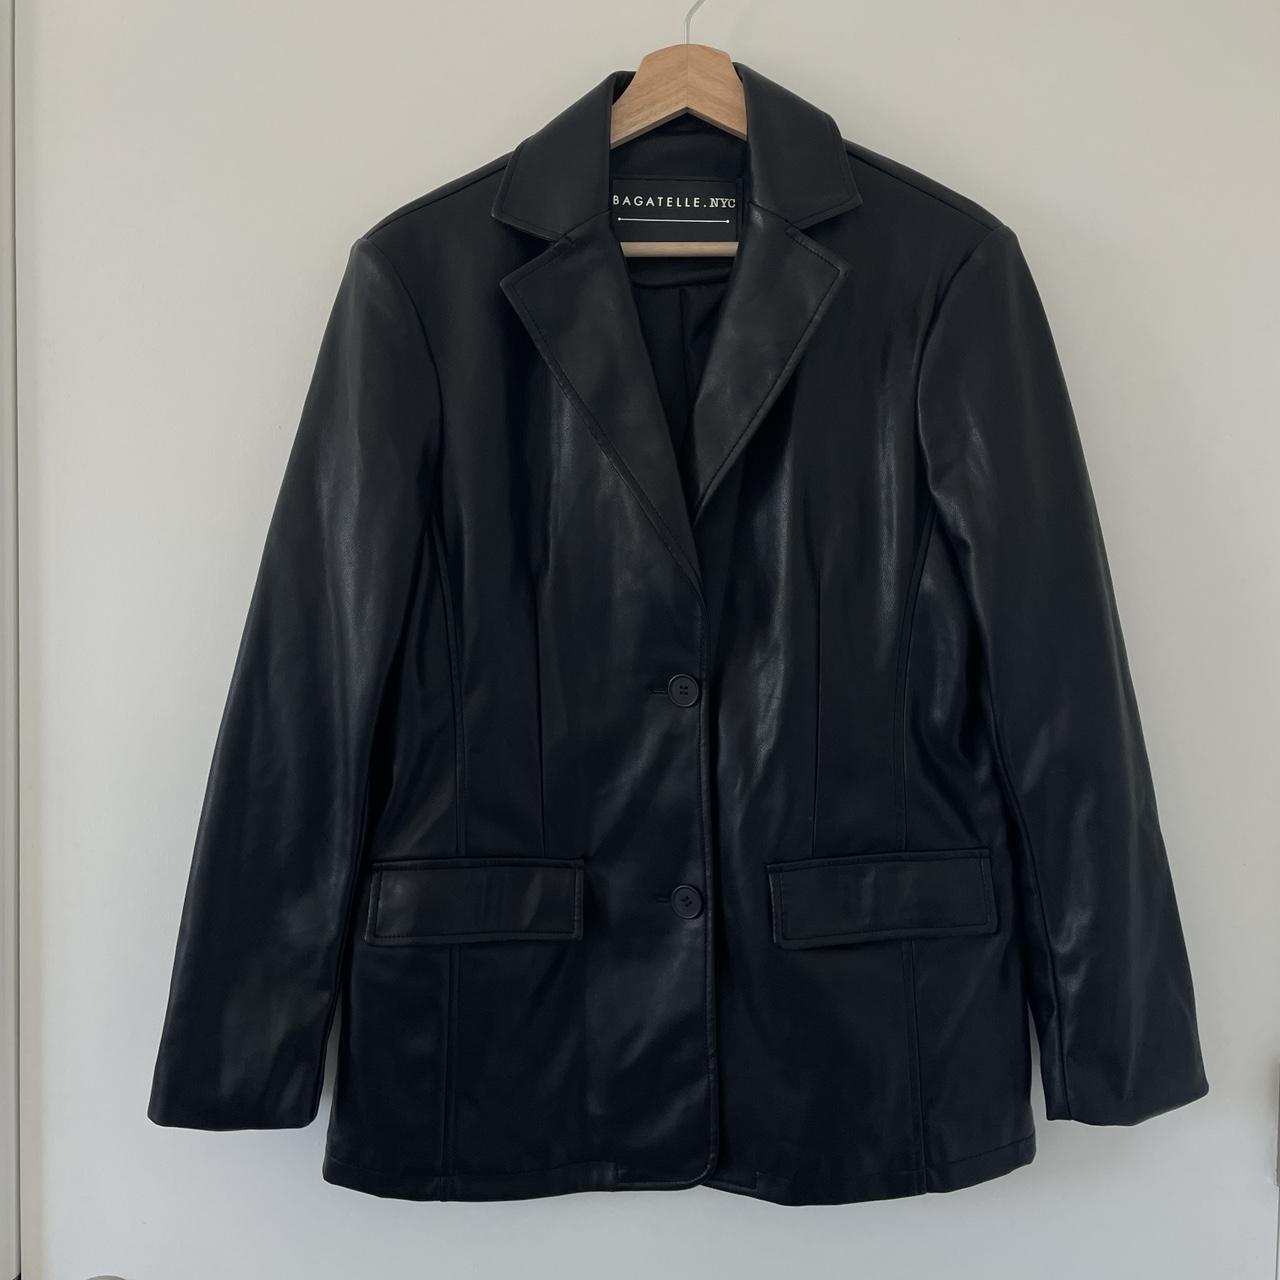 Bagatelle. NYC faux leather blazer Size Small 31”... - Depop